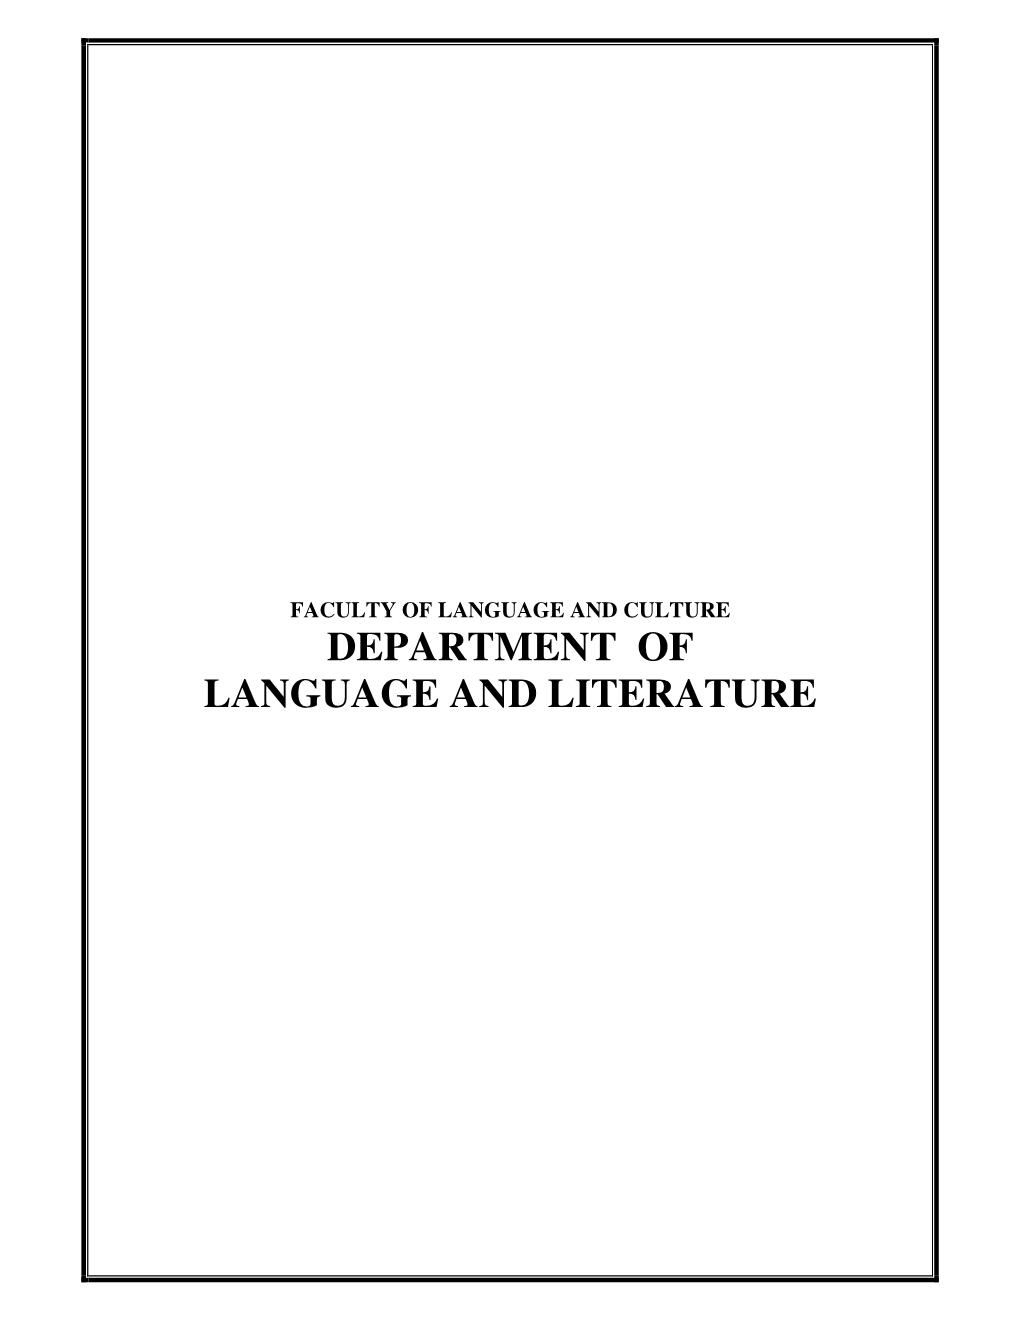 Department of Language and Literature